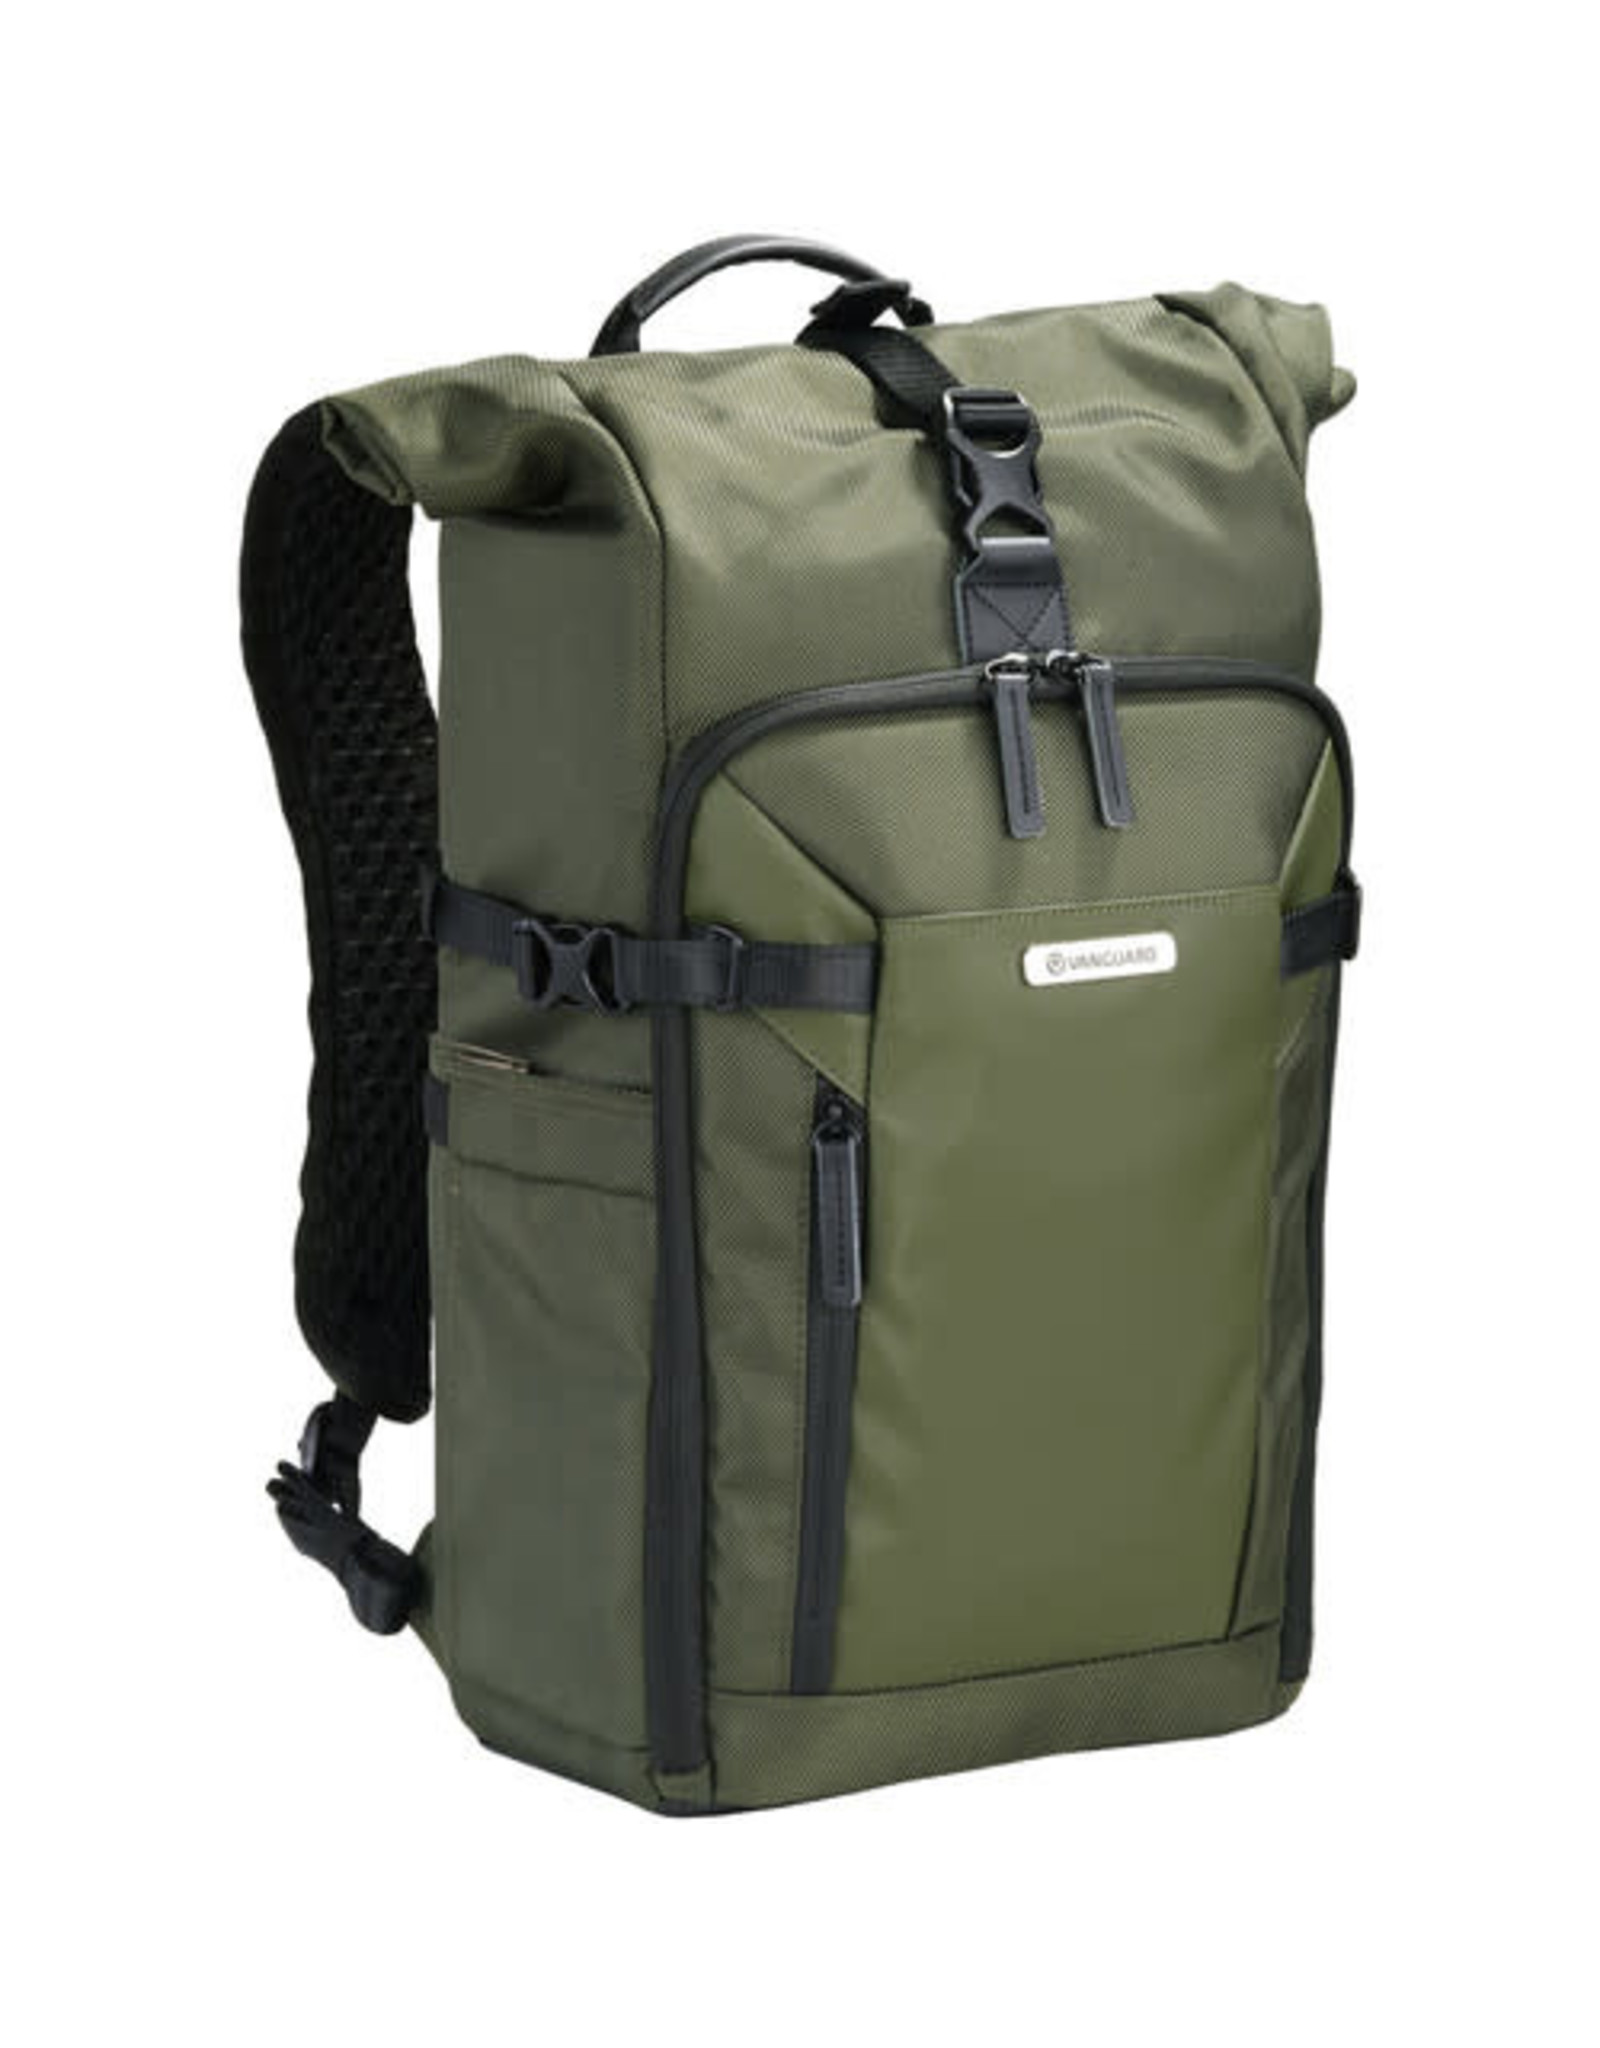 Vanguard Vanguard VEO Select 43RB Backpack (Choose Color)